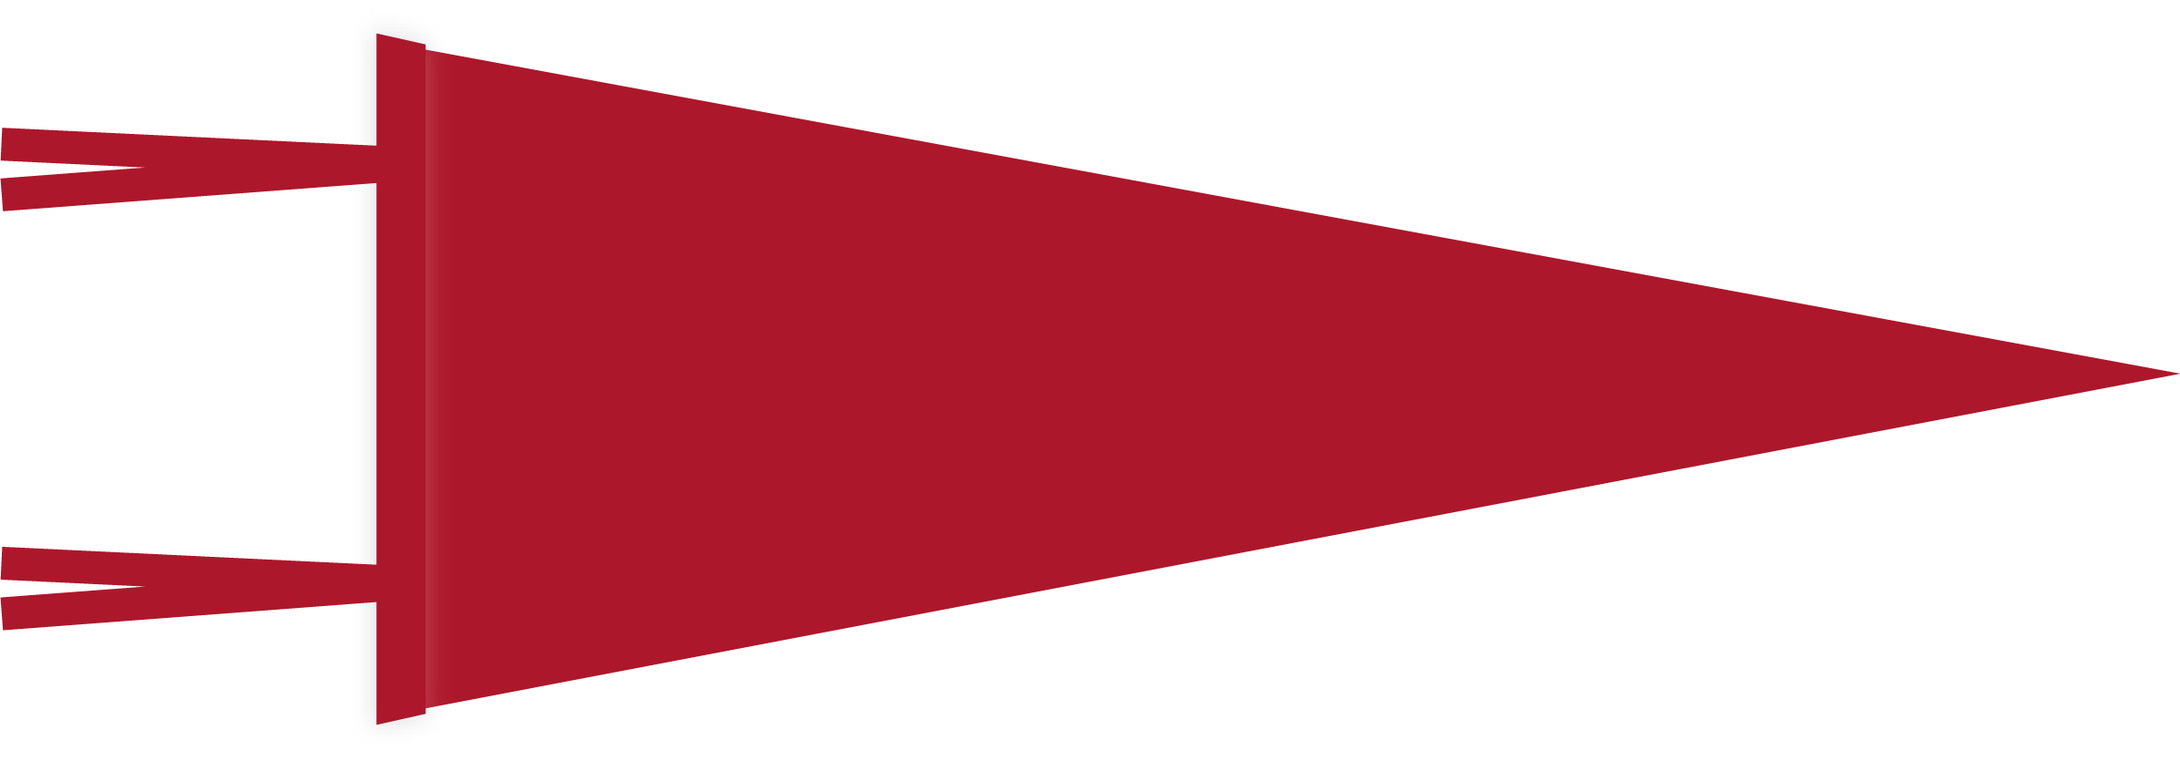 Red Blank Pennant Flag